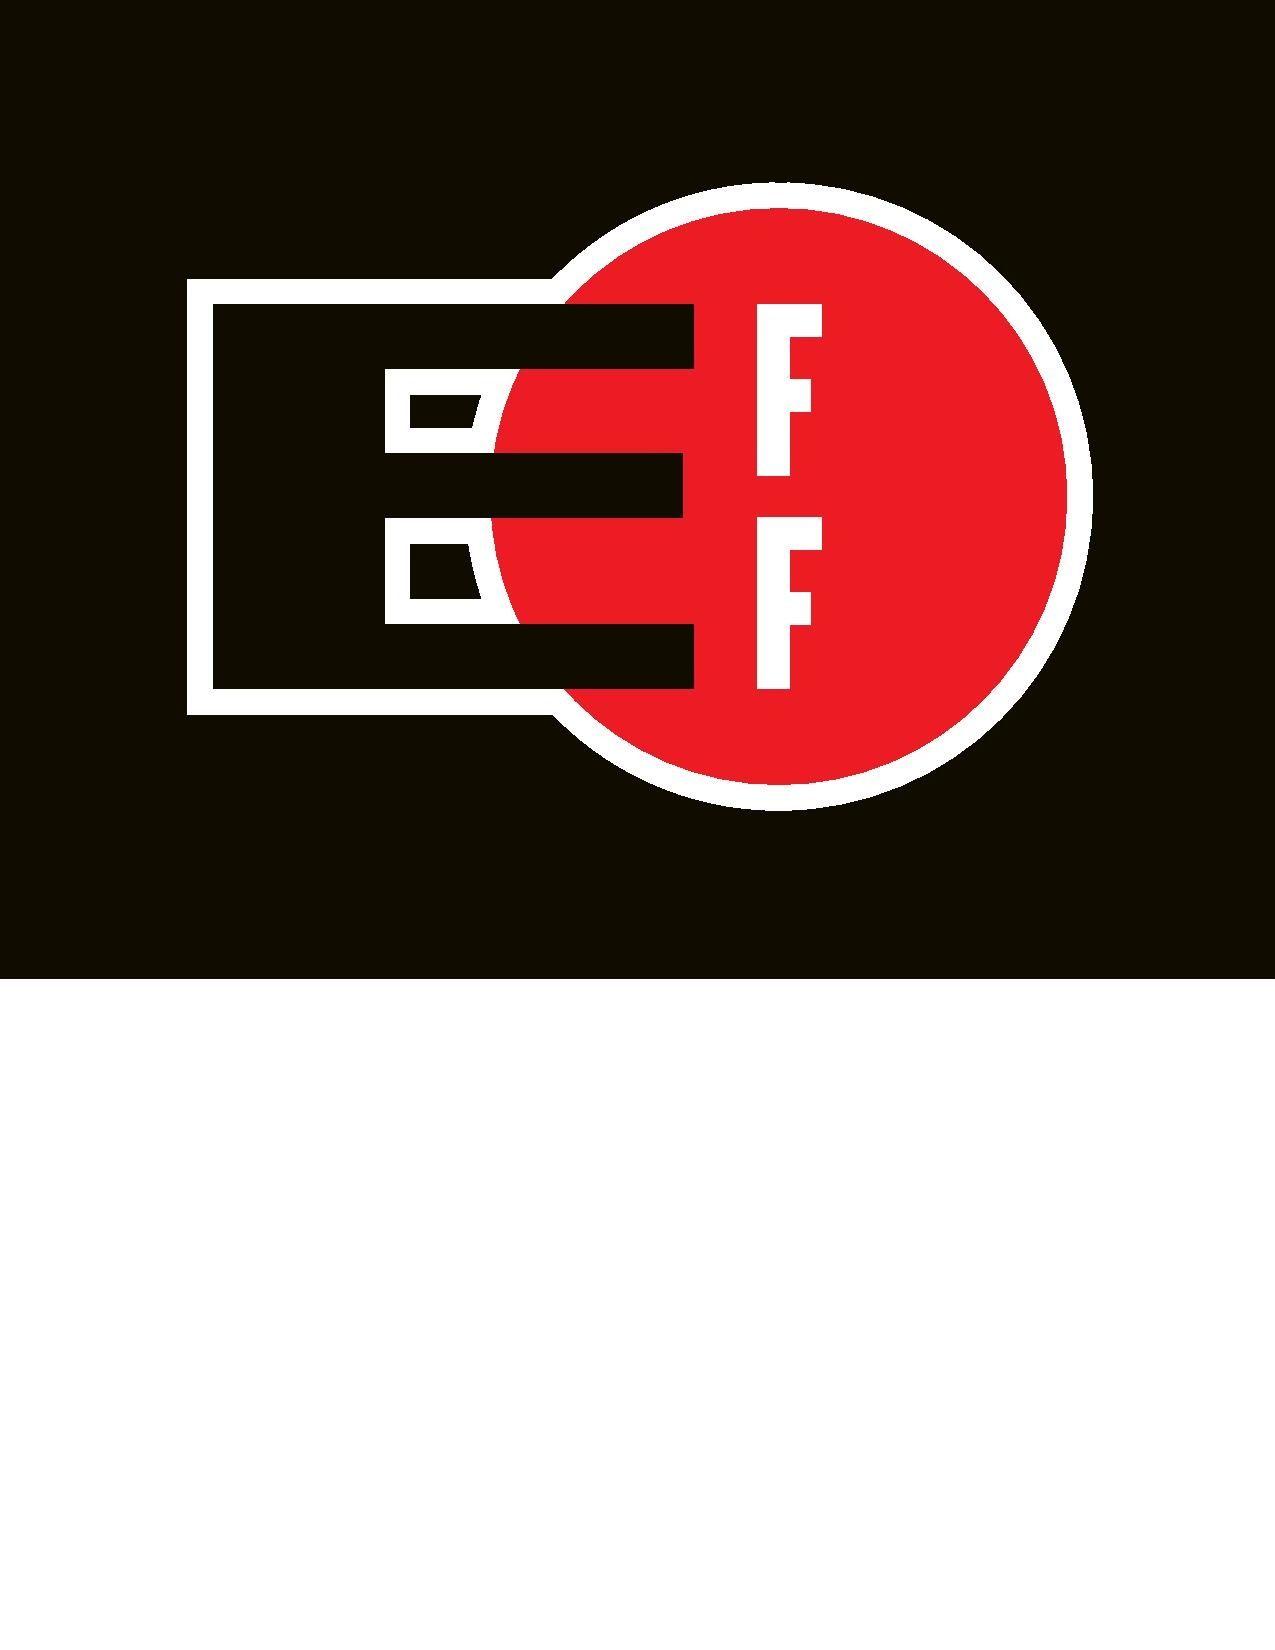 Eff Logo - File:EFF-logo-plain-black.pdf - Wikimedia Commons